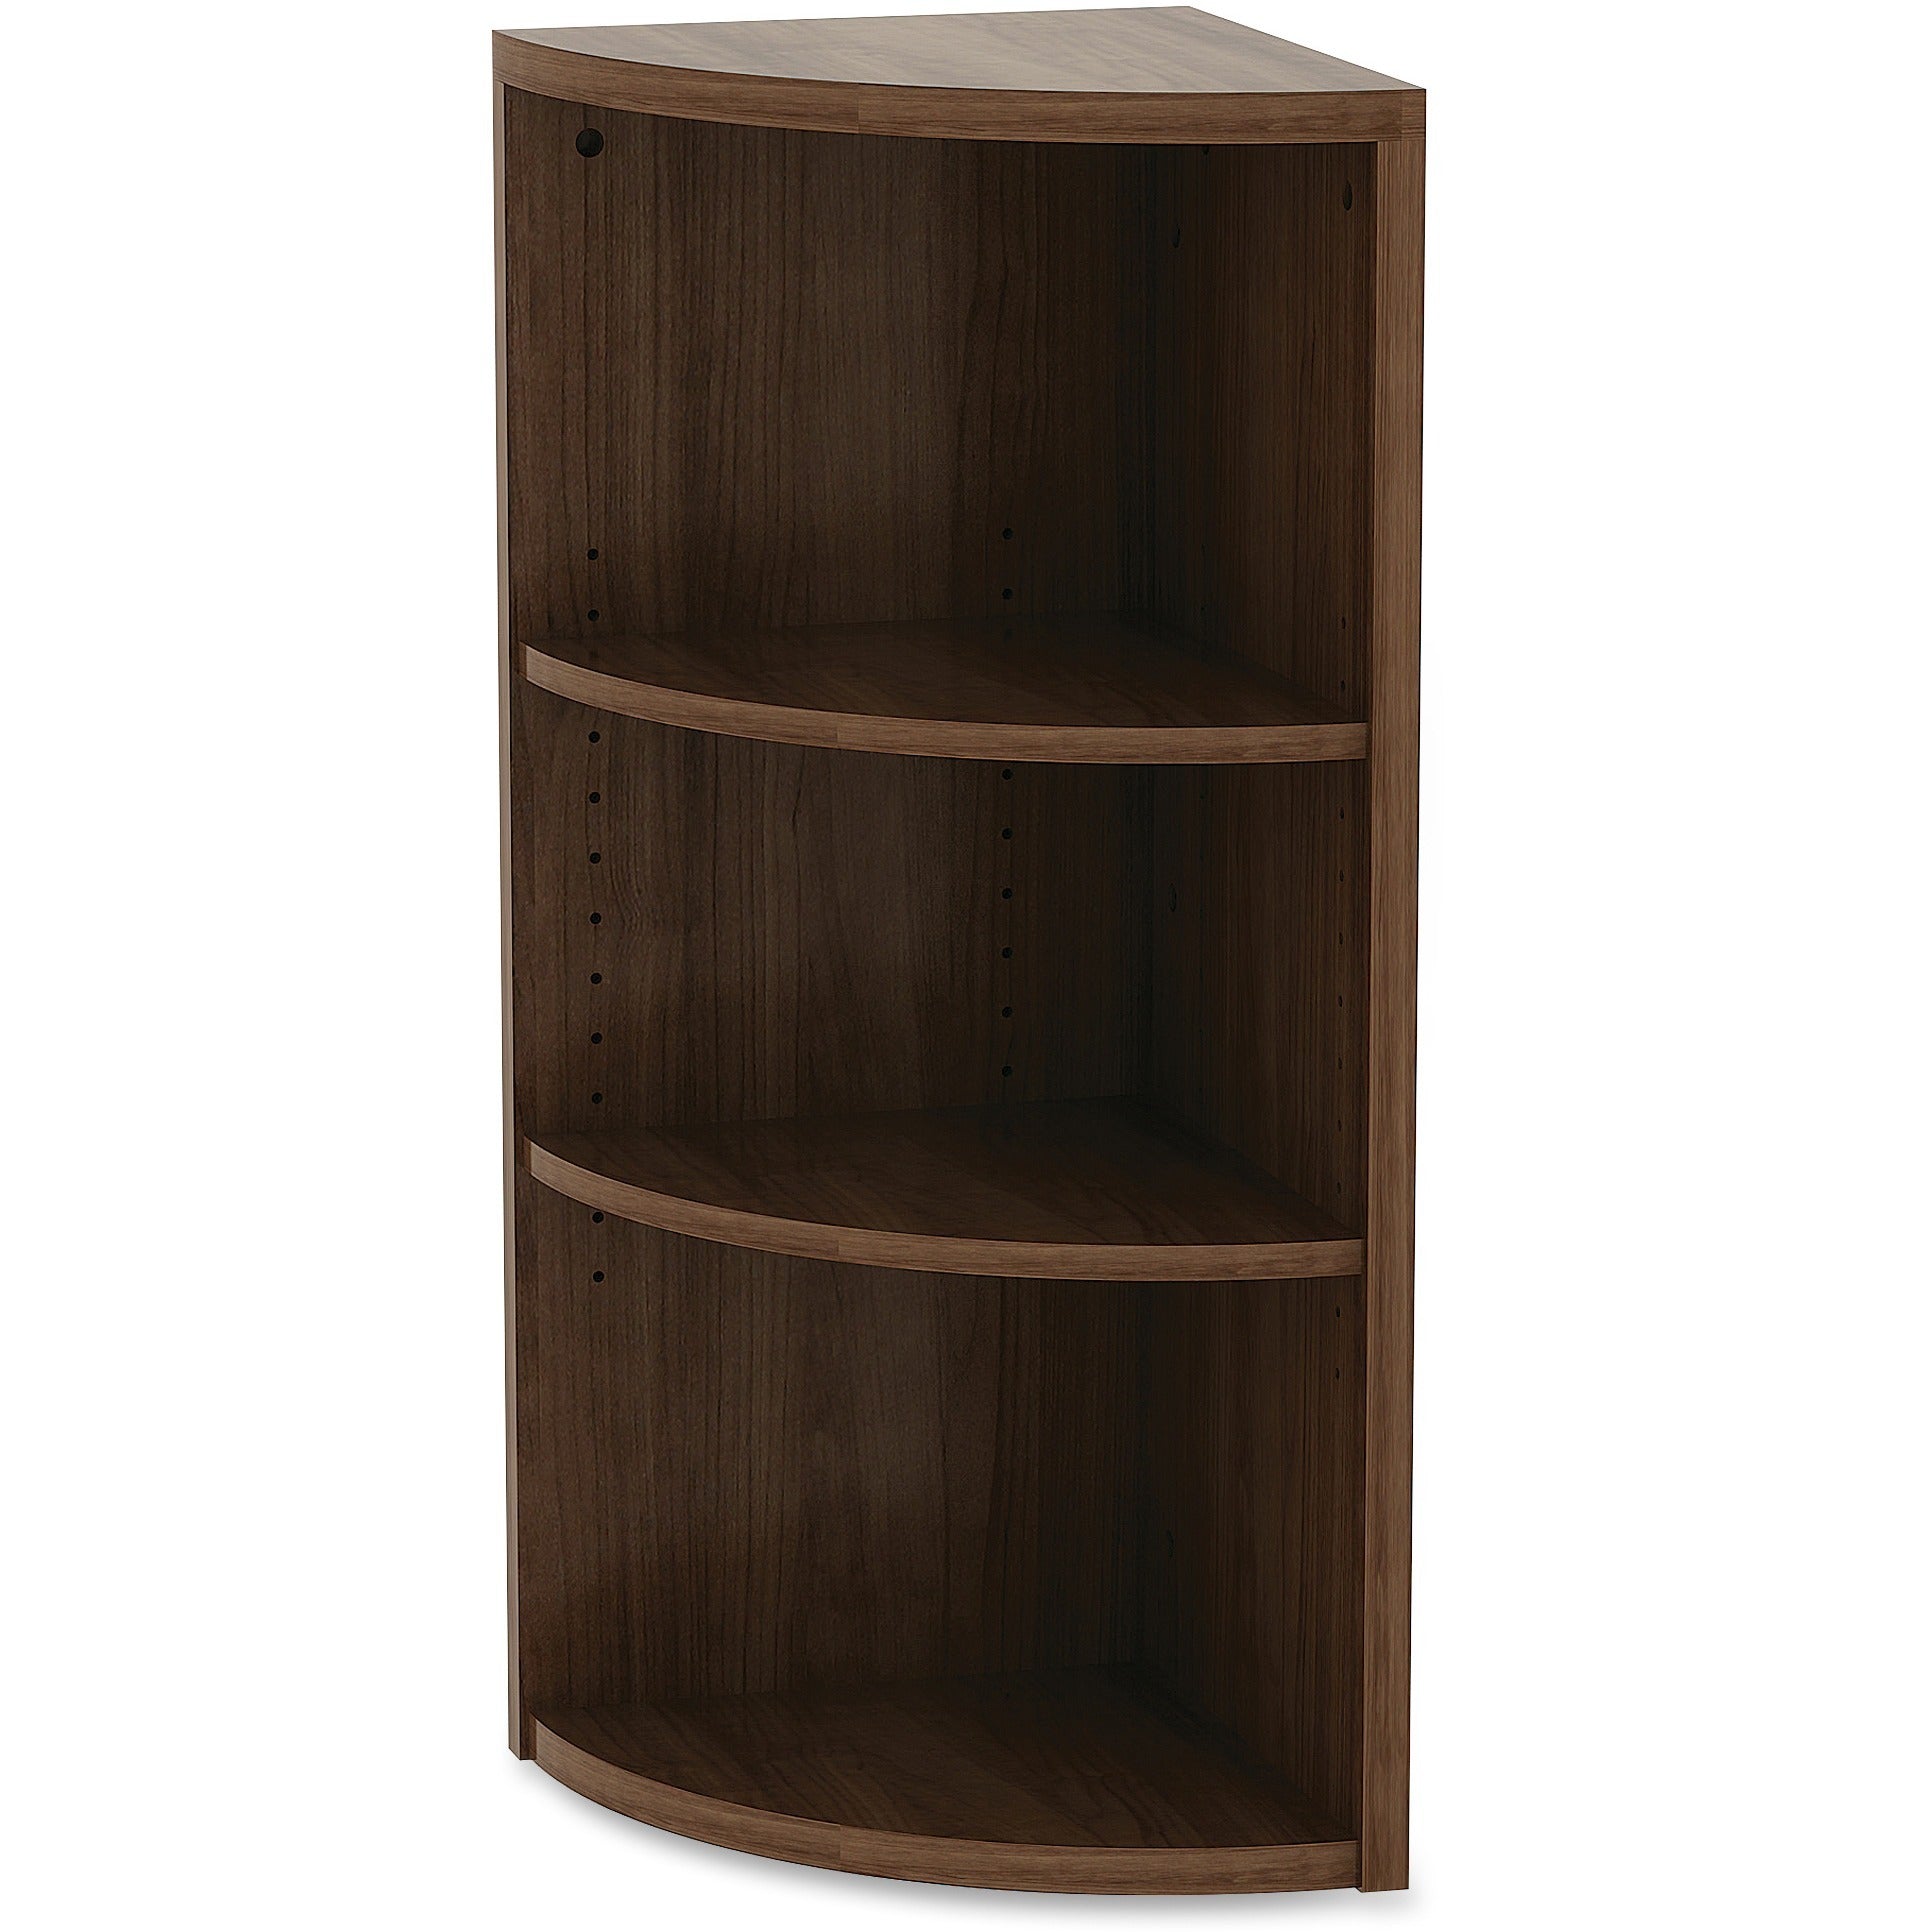 Lorell Essentials Series Hutch End Corner Bookcase - 36" Height x 14.8" Width37.8" Length%Floor - Walnut - Laminate, Polyvinyl Chloride (PVC) - 1 Each - 3